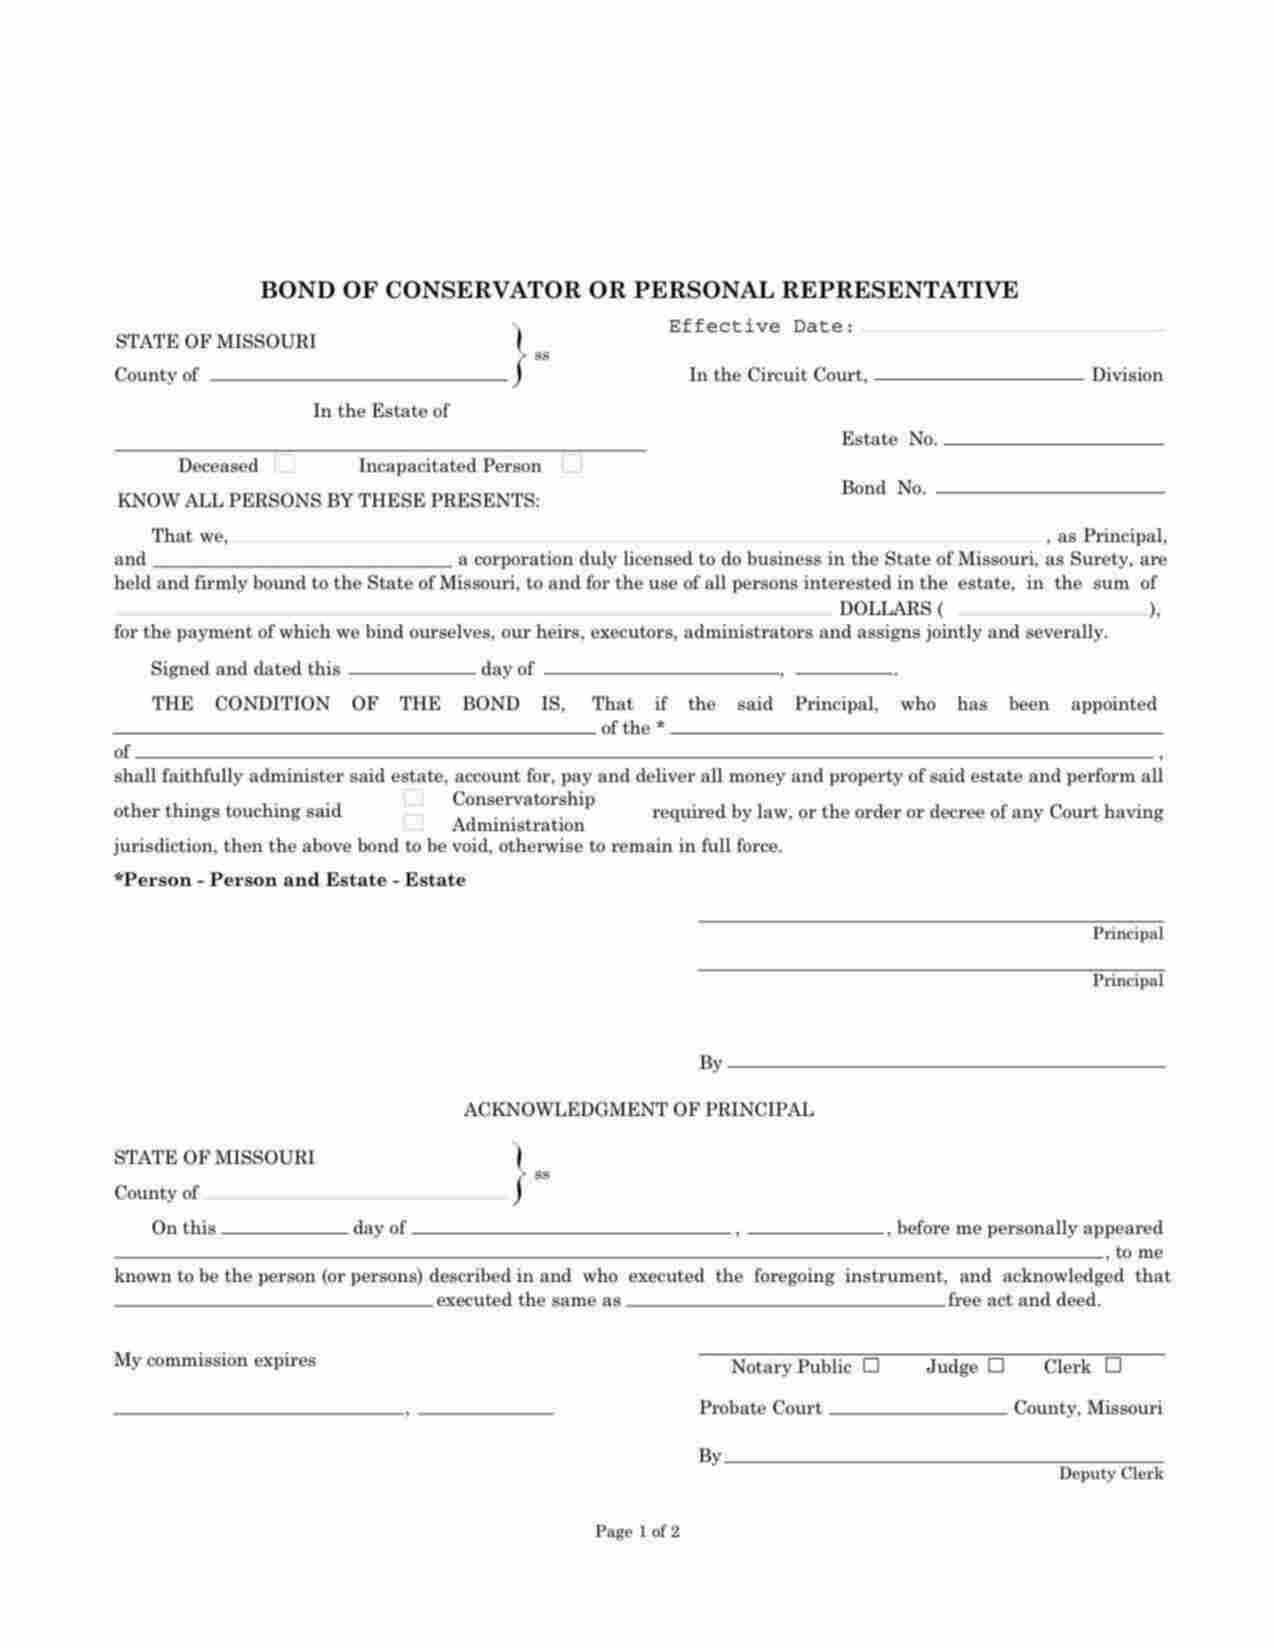 Missouri Probate Administrator, Executor, Conservator, or Guardian Bond Form